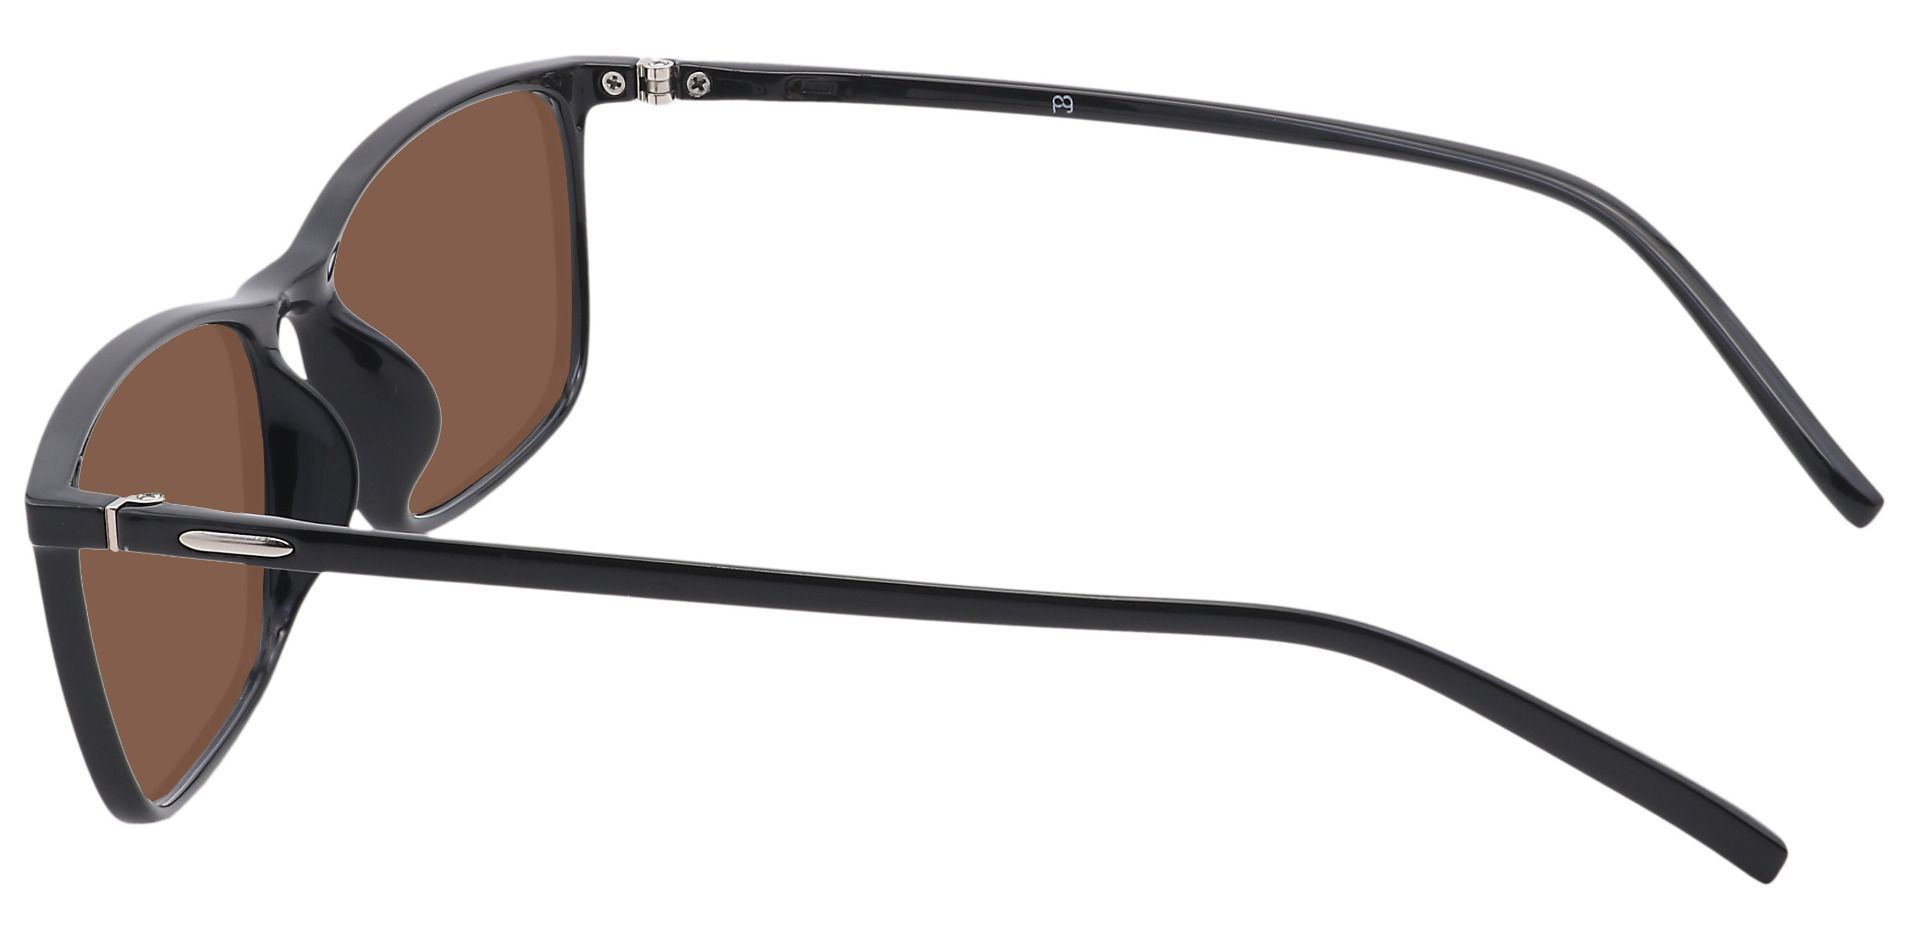 Fuji Rectangle Prescription Sunglasses - Black Frame With Brown Lenses